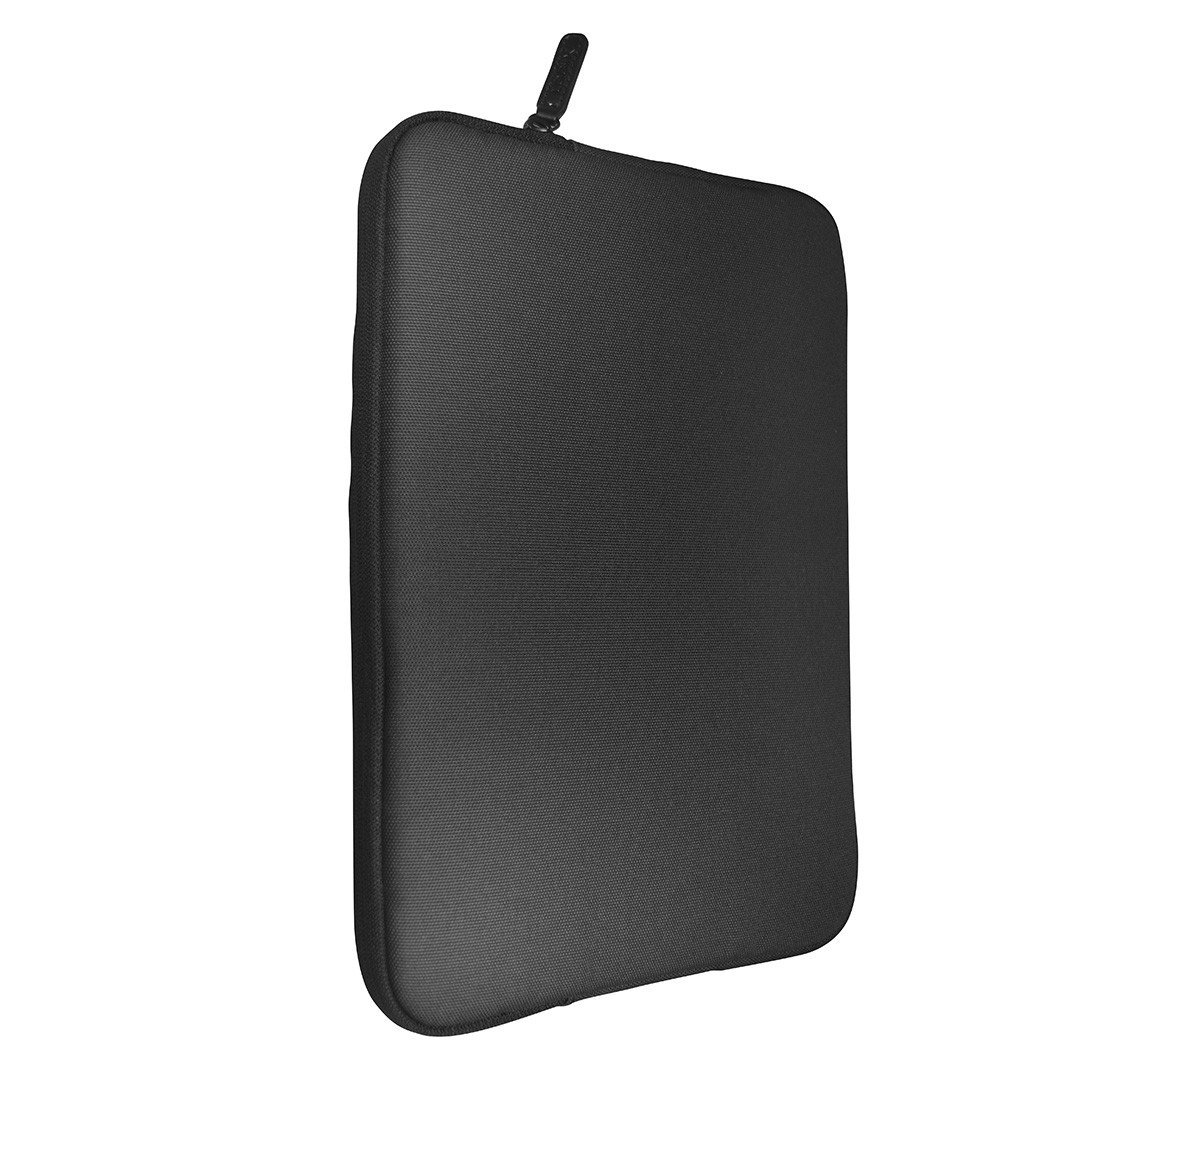 Laptop/Tablet Cases & Bags